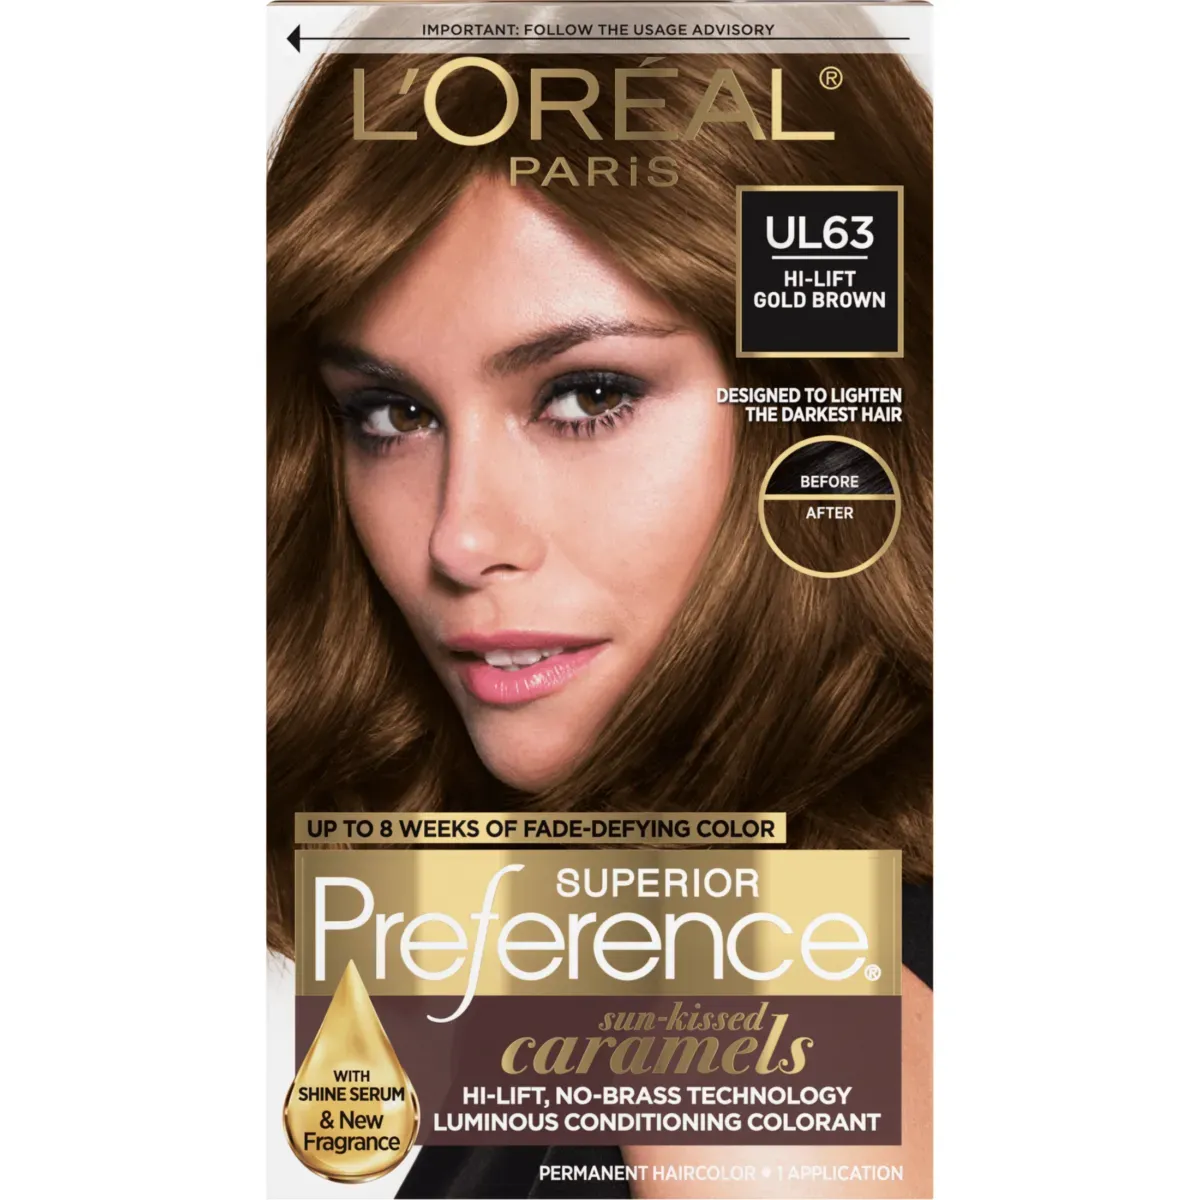 L'Oreal Paris Superior Preference Permanent Hair Color, UL63 Hi-Lift Gold Brown